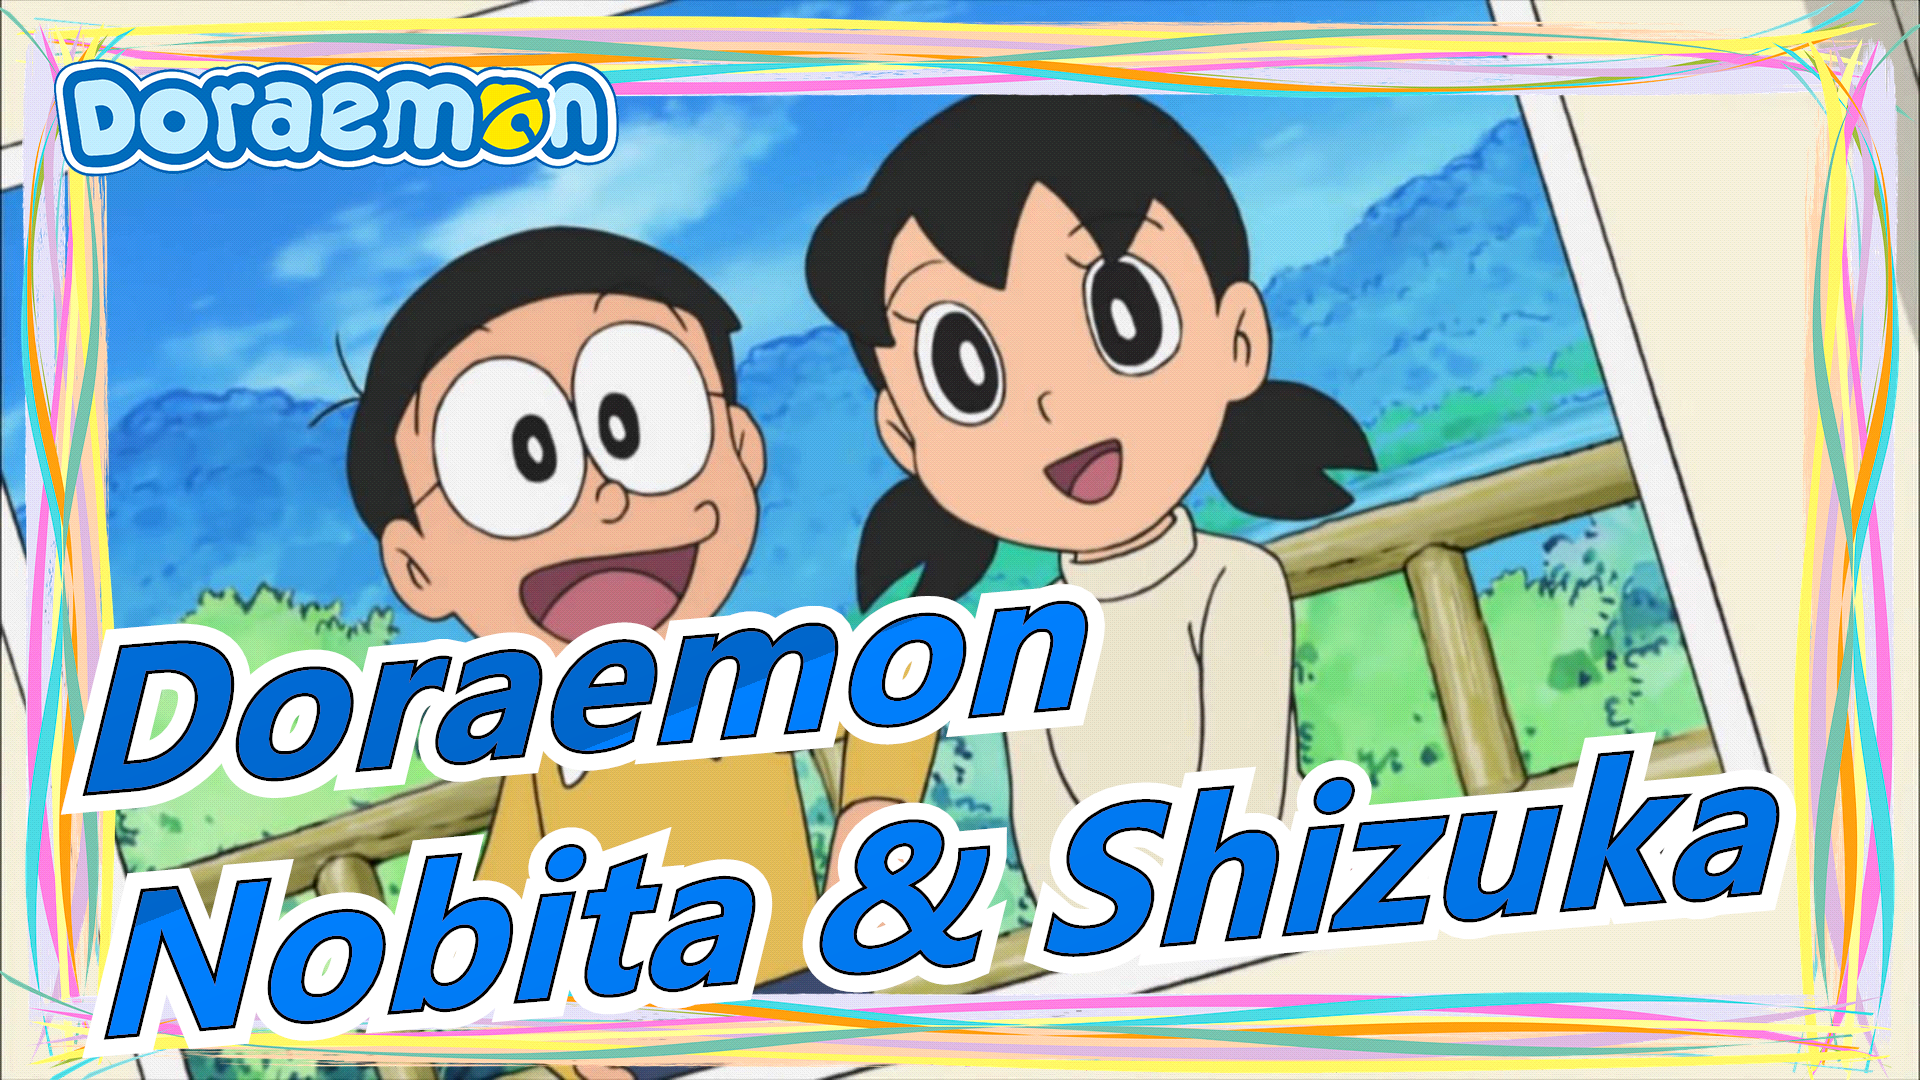 Doraemon|Nobita & Shizuka]Swear With Fingers/We Should Always Be  Together/Happy 30th Anniversary - Bilibili